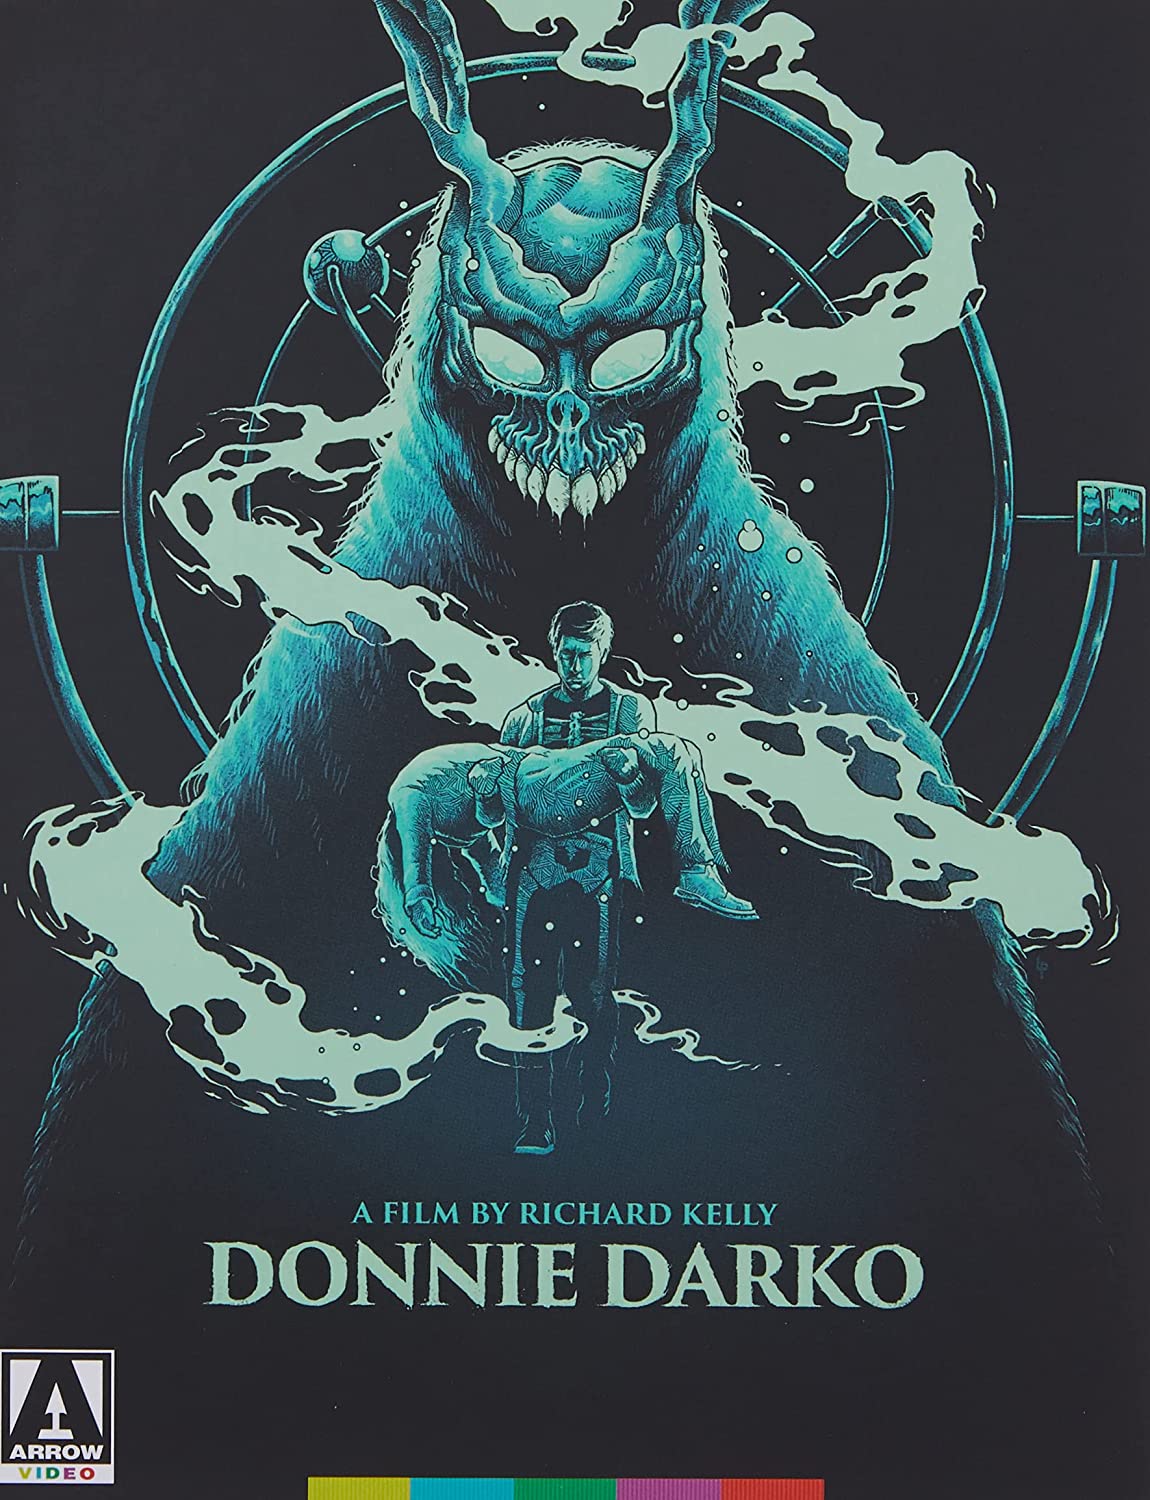 Donnie Darko 4k UHD Arrow Video Limited Edition Collector's Set - $26.66 AC at Amazon.com